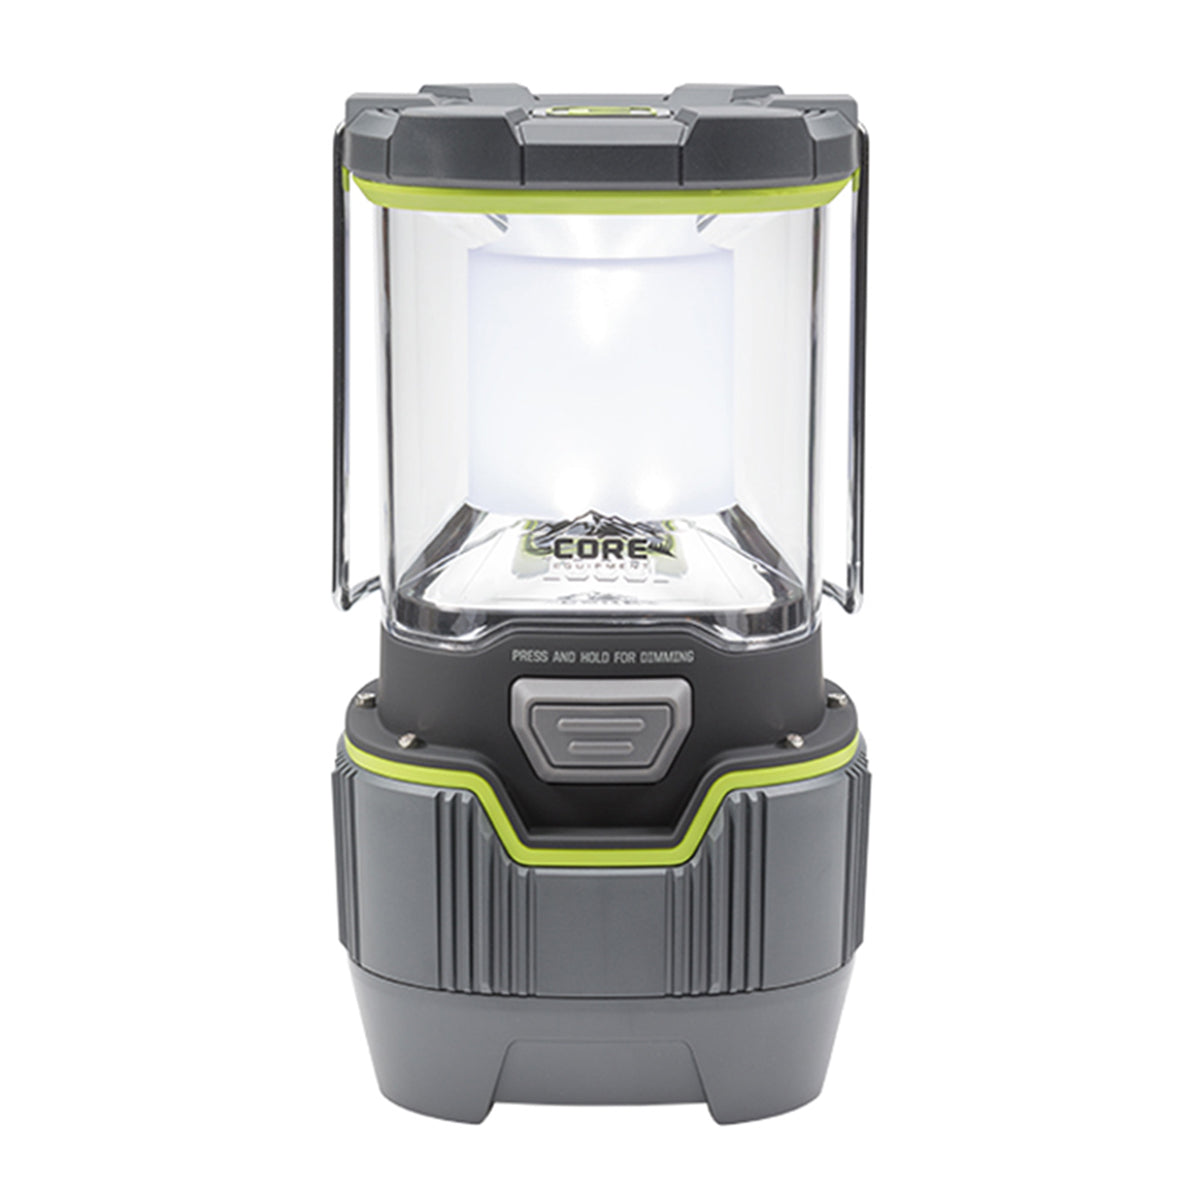 Tough Light 1000-LR Rechargeable LED Lantern (Green)